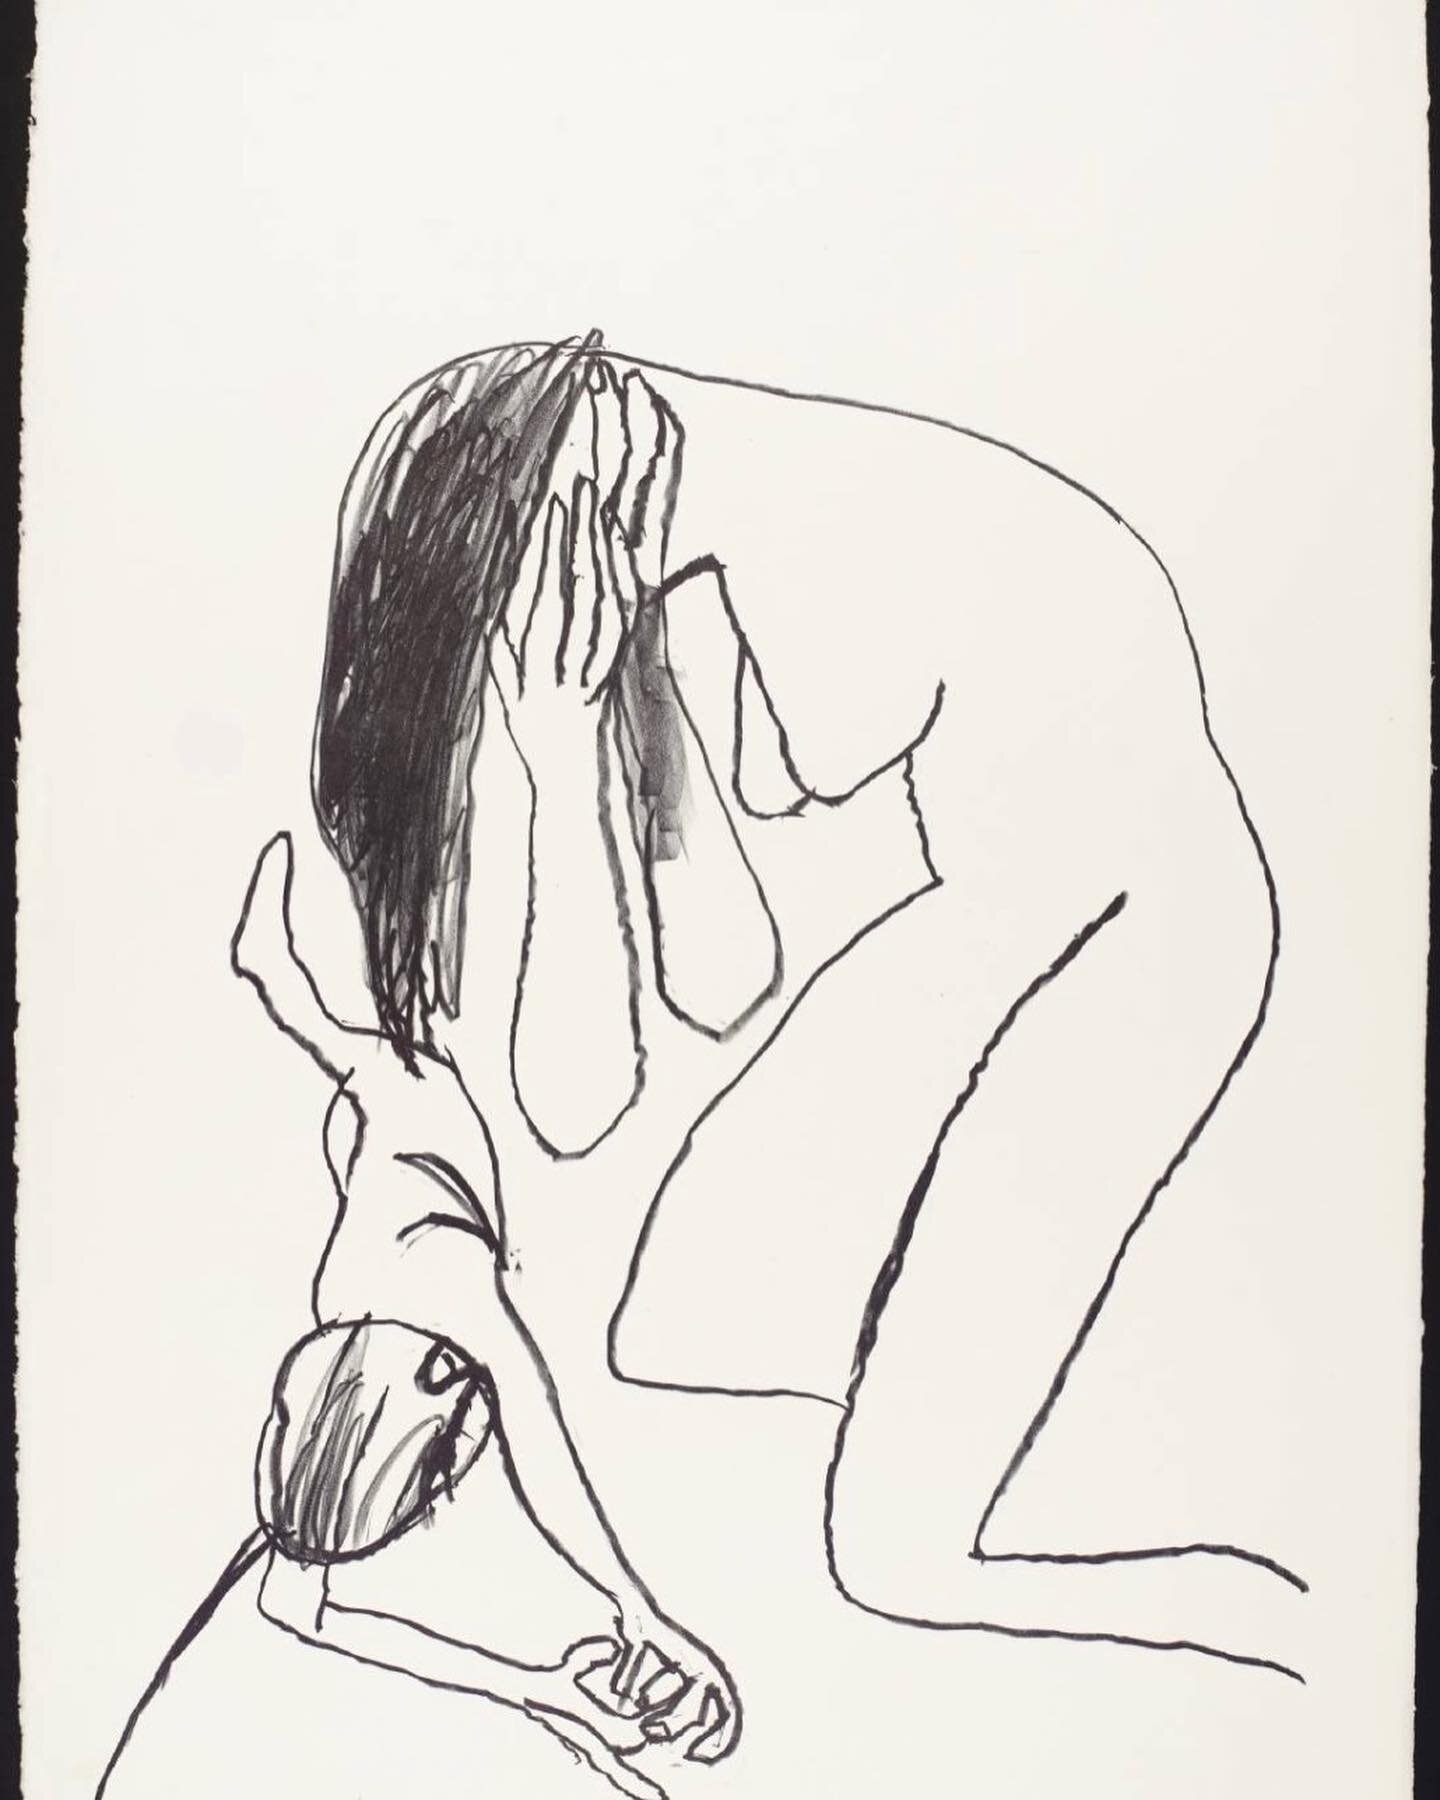 ..
. Shmuel Shapiro, Gates of death, 1966
. Pablo Picasso, Mother with dead child, 1937
. K&auml;the Kollwitz, Mother with child, 1914
. K&auml;the Kollwitz, The Mothers, 1921